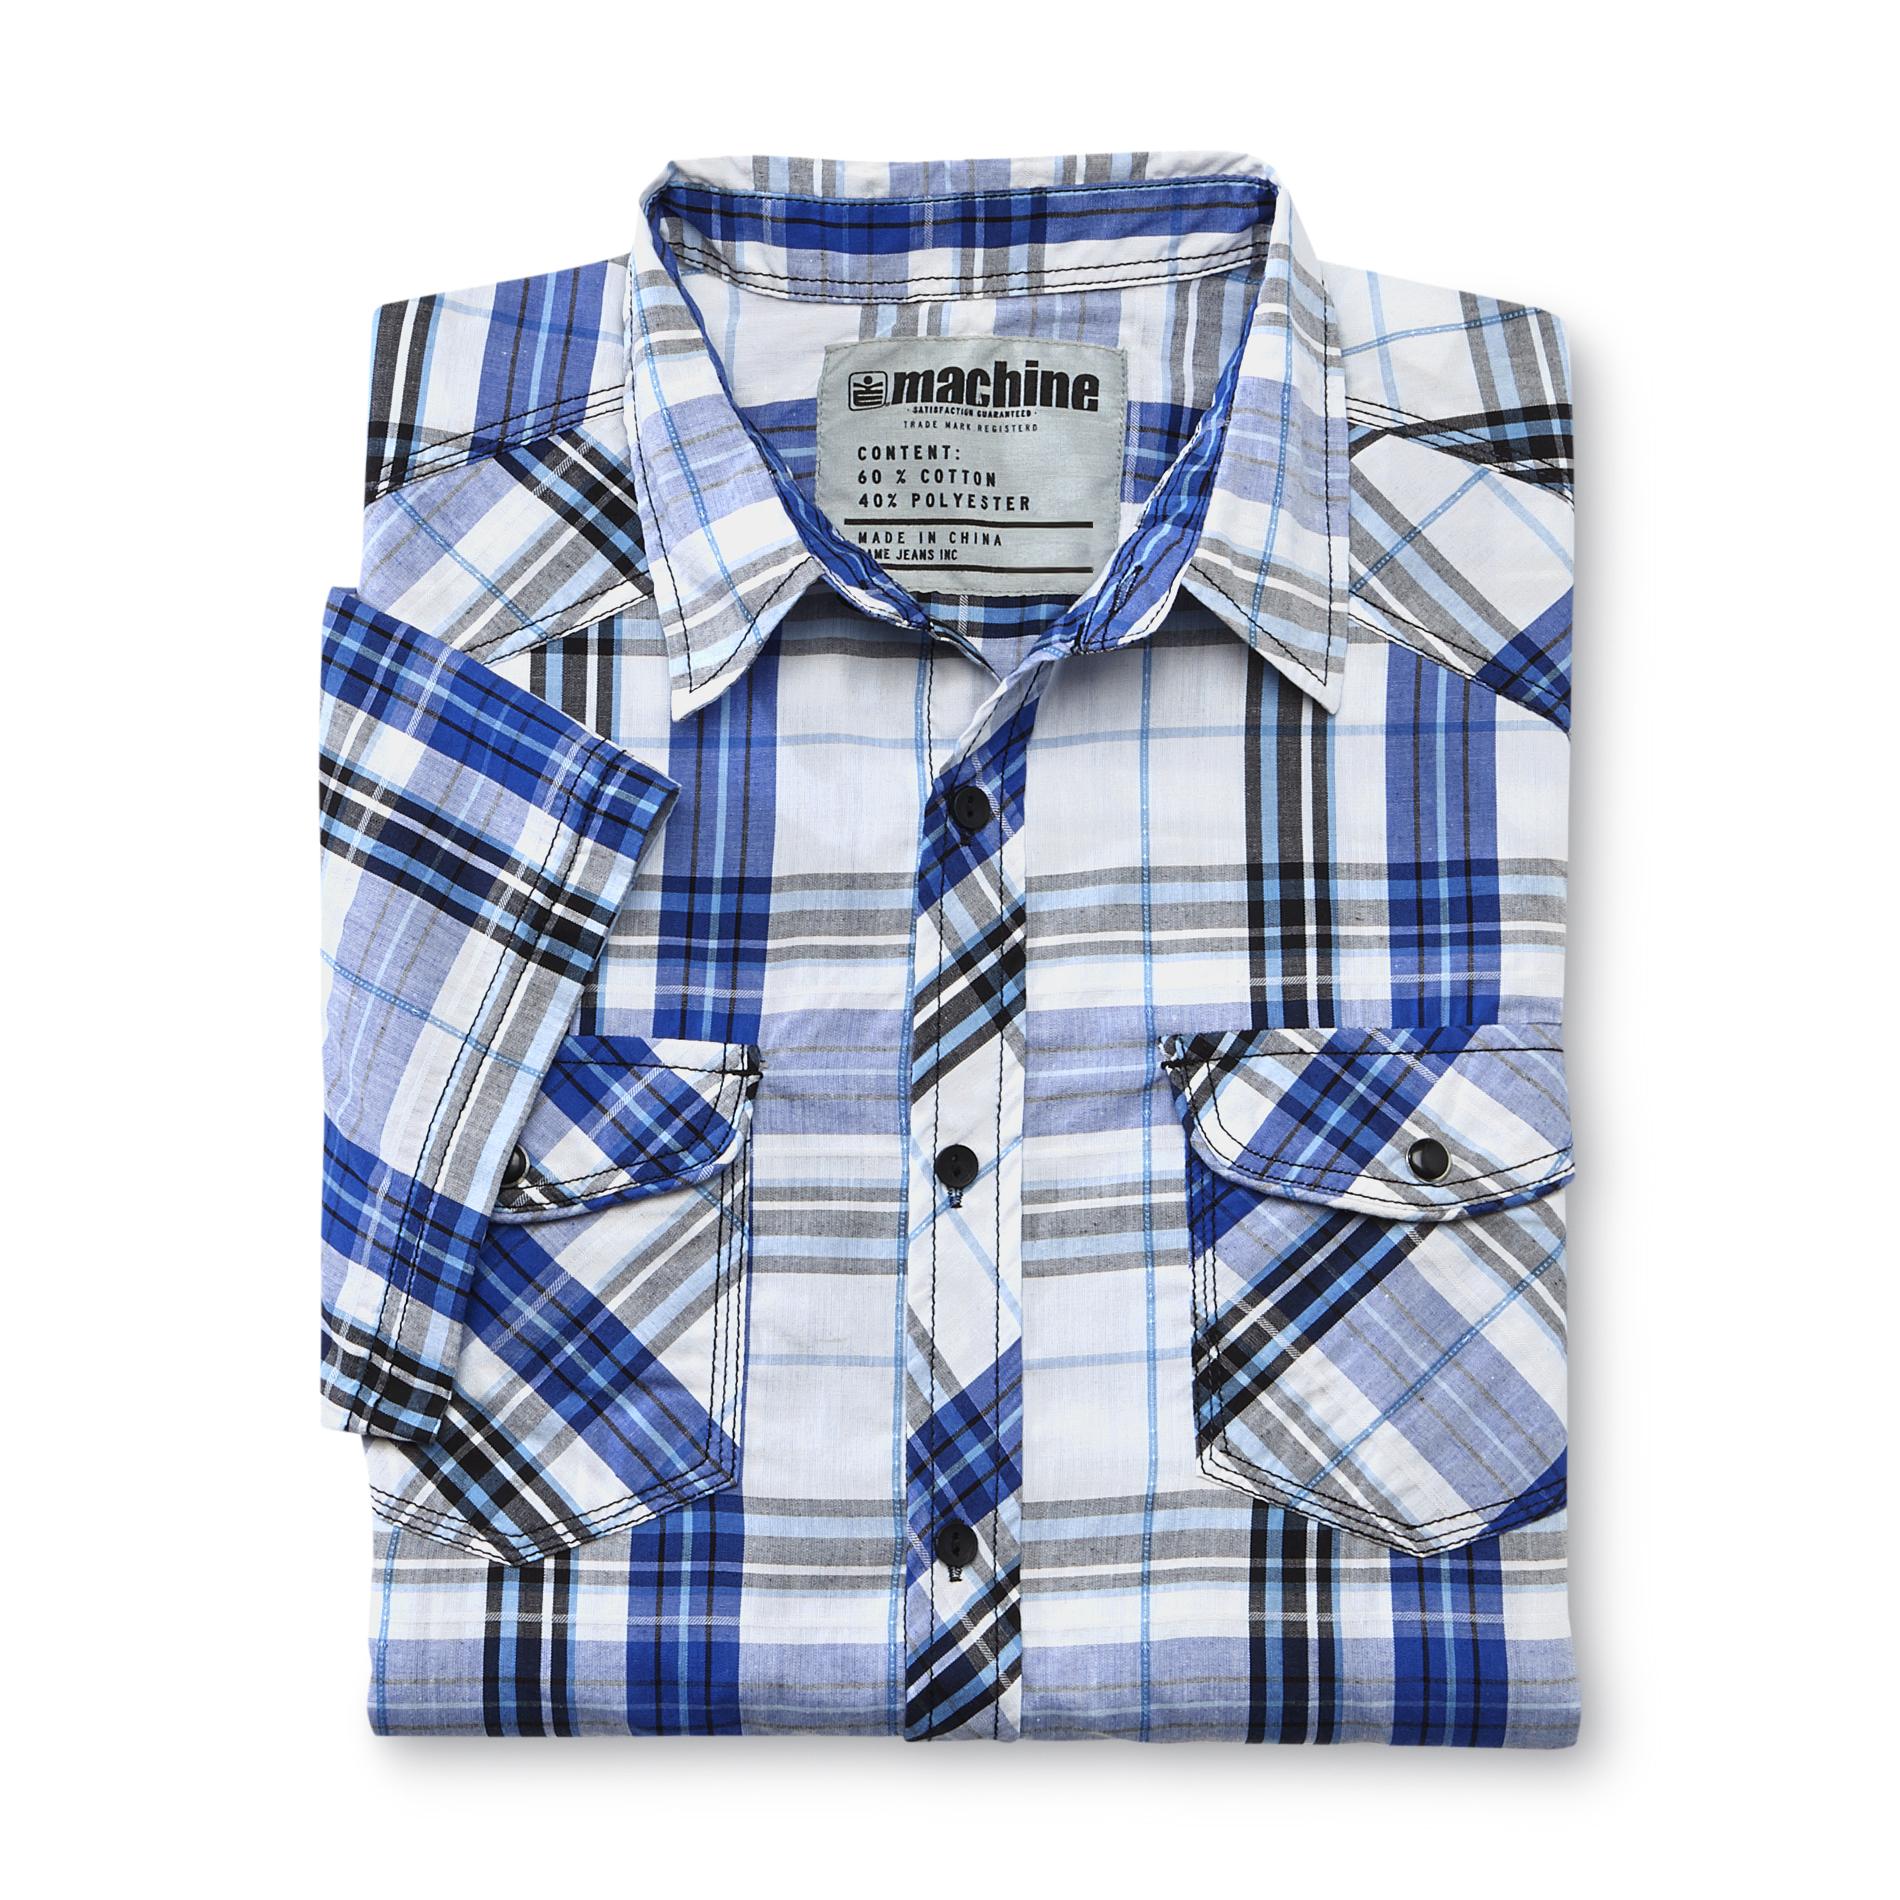 Point Zero Young Men's Short-Sleeve Shirt - Plaid